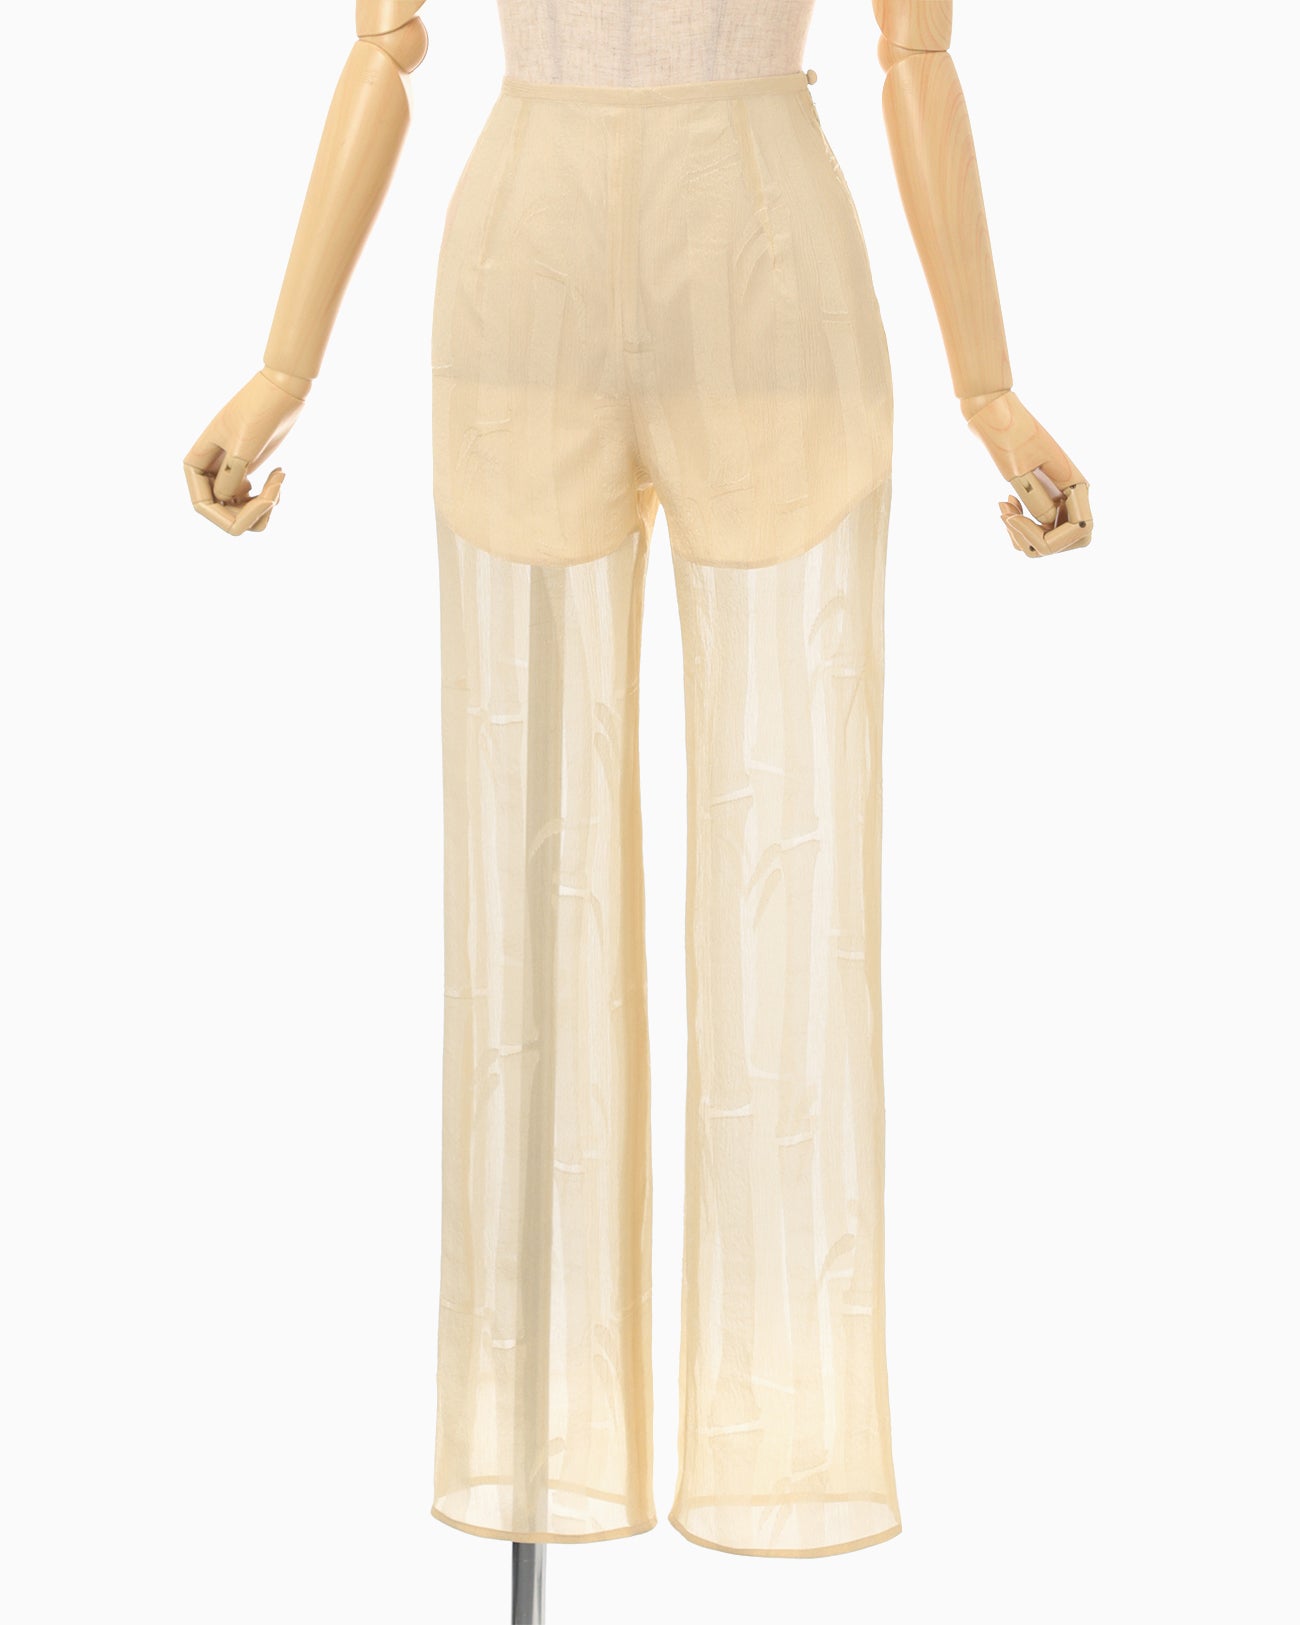 Bamboo Motif Willow Jacquard Sheer Trousers - beige